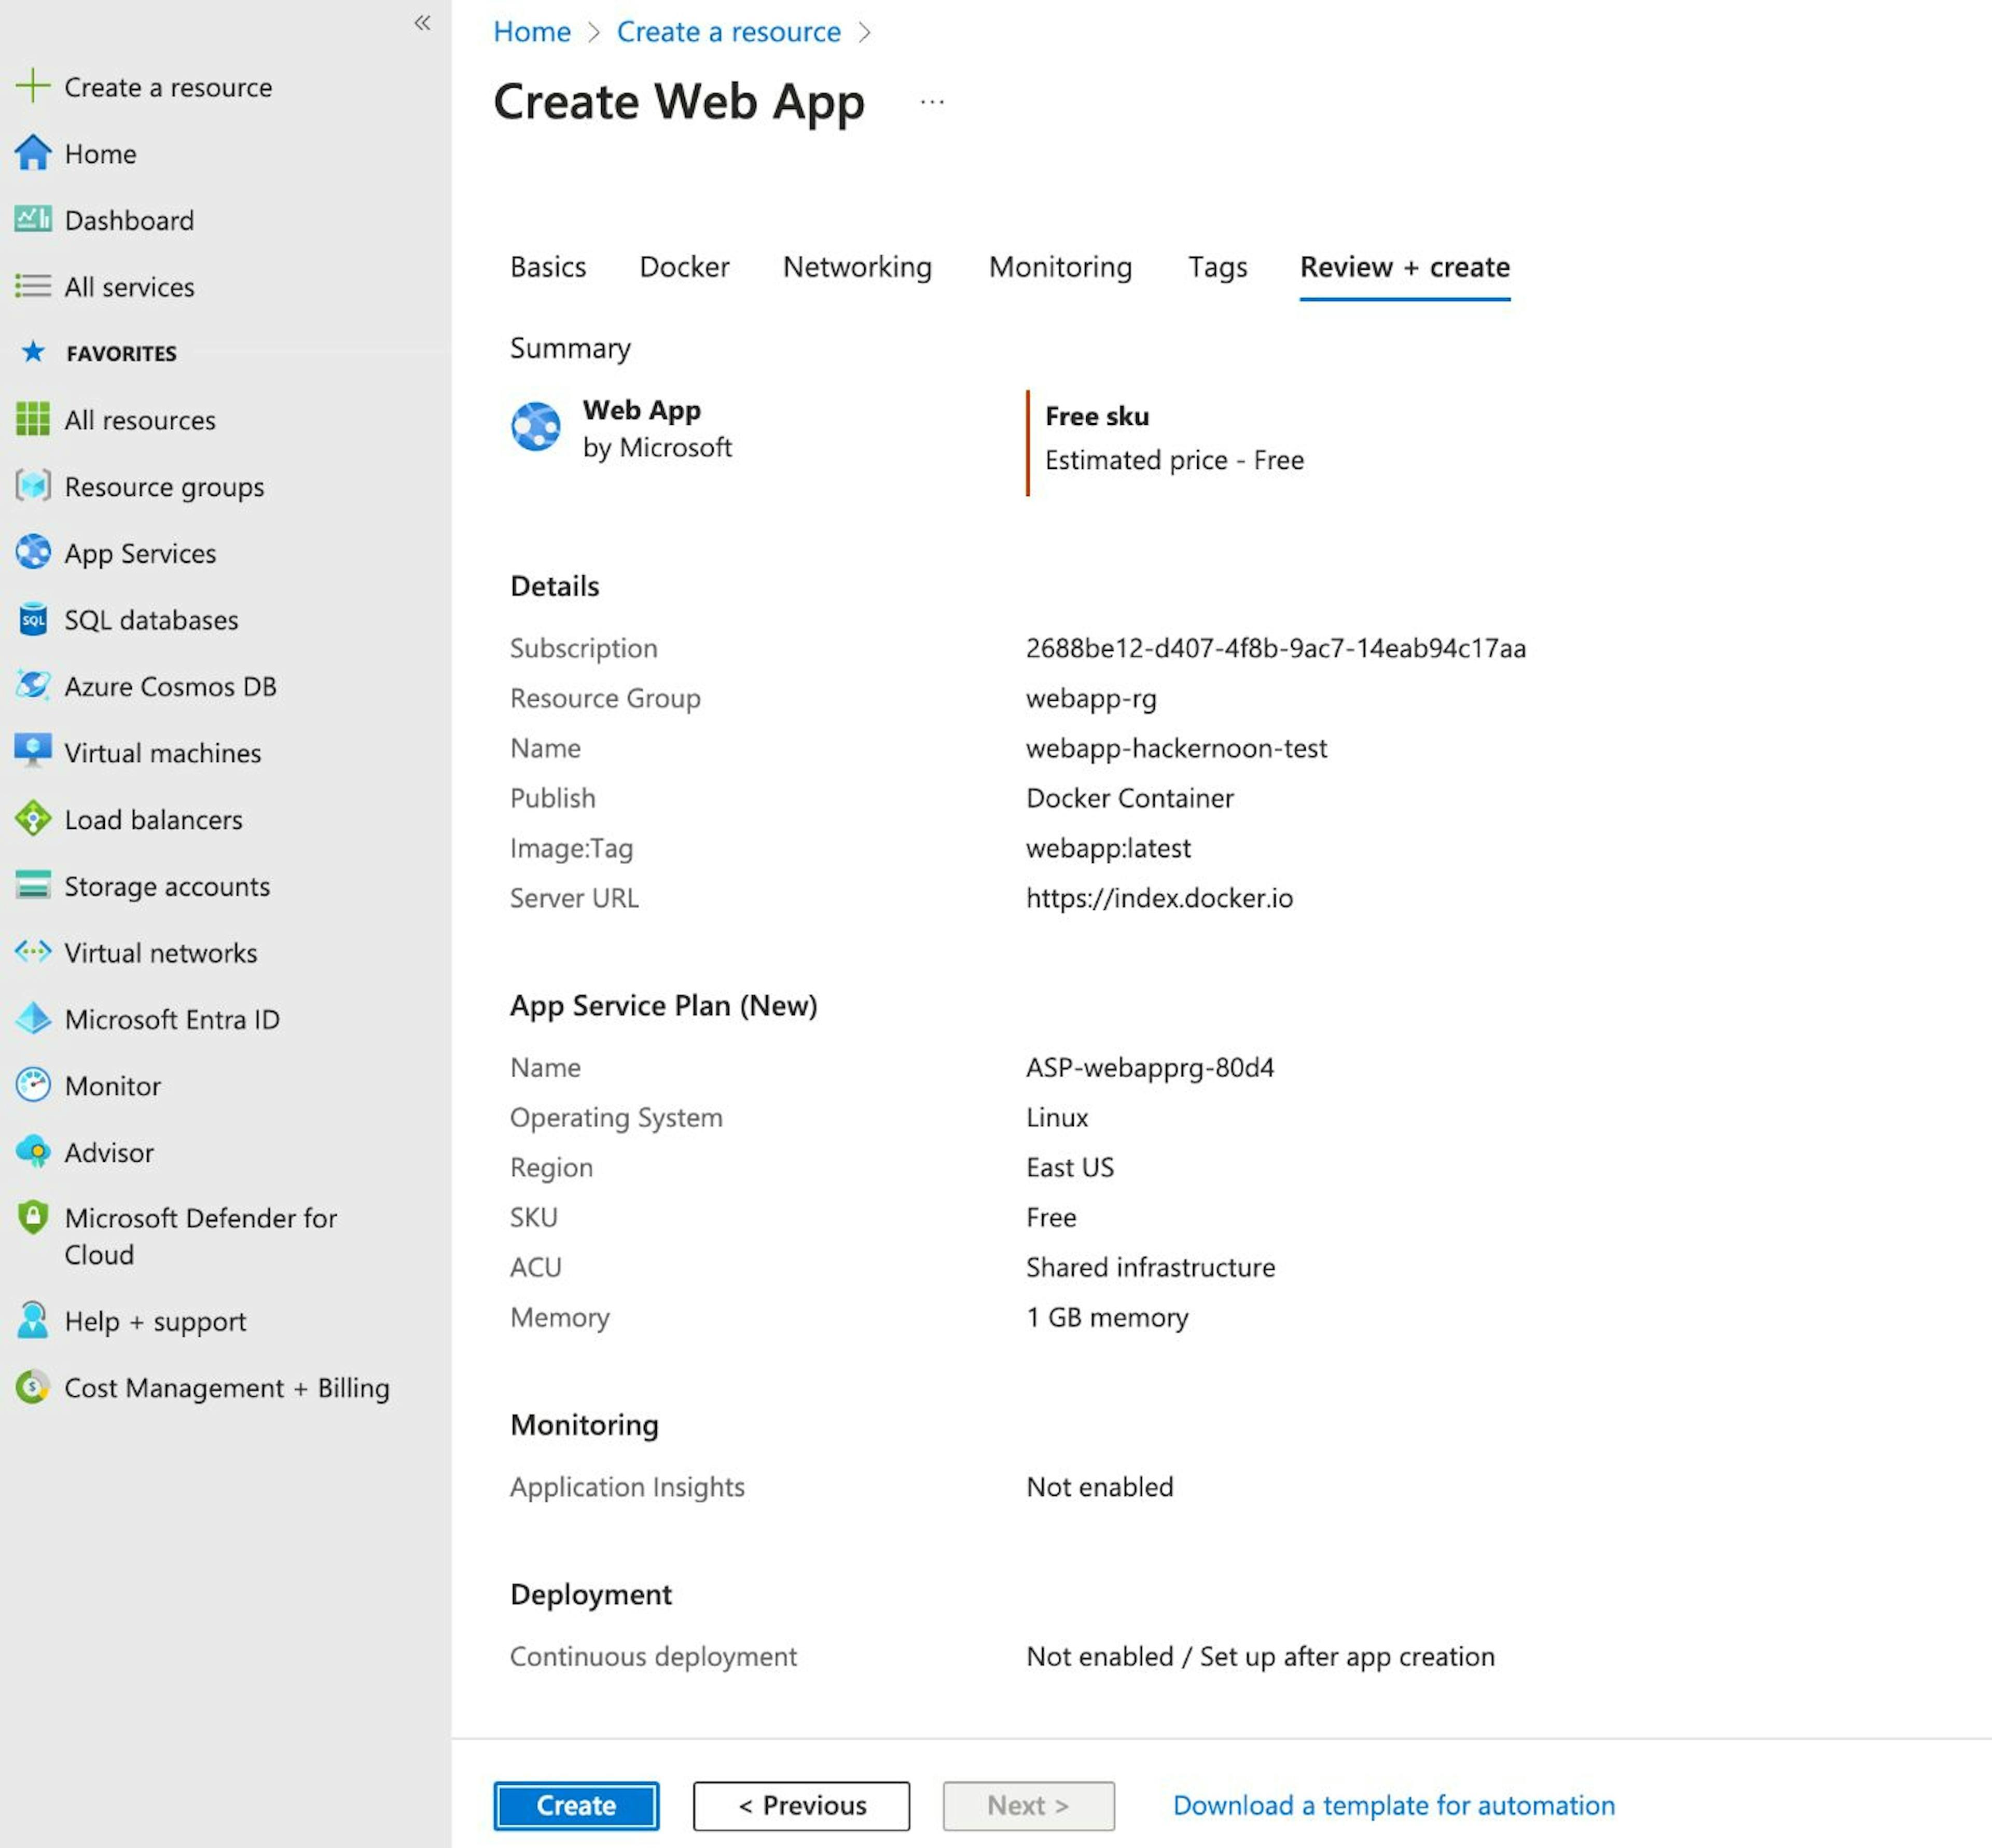 Create Web App: Review + create tab